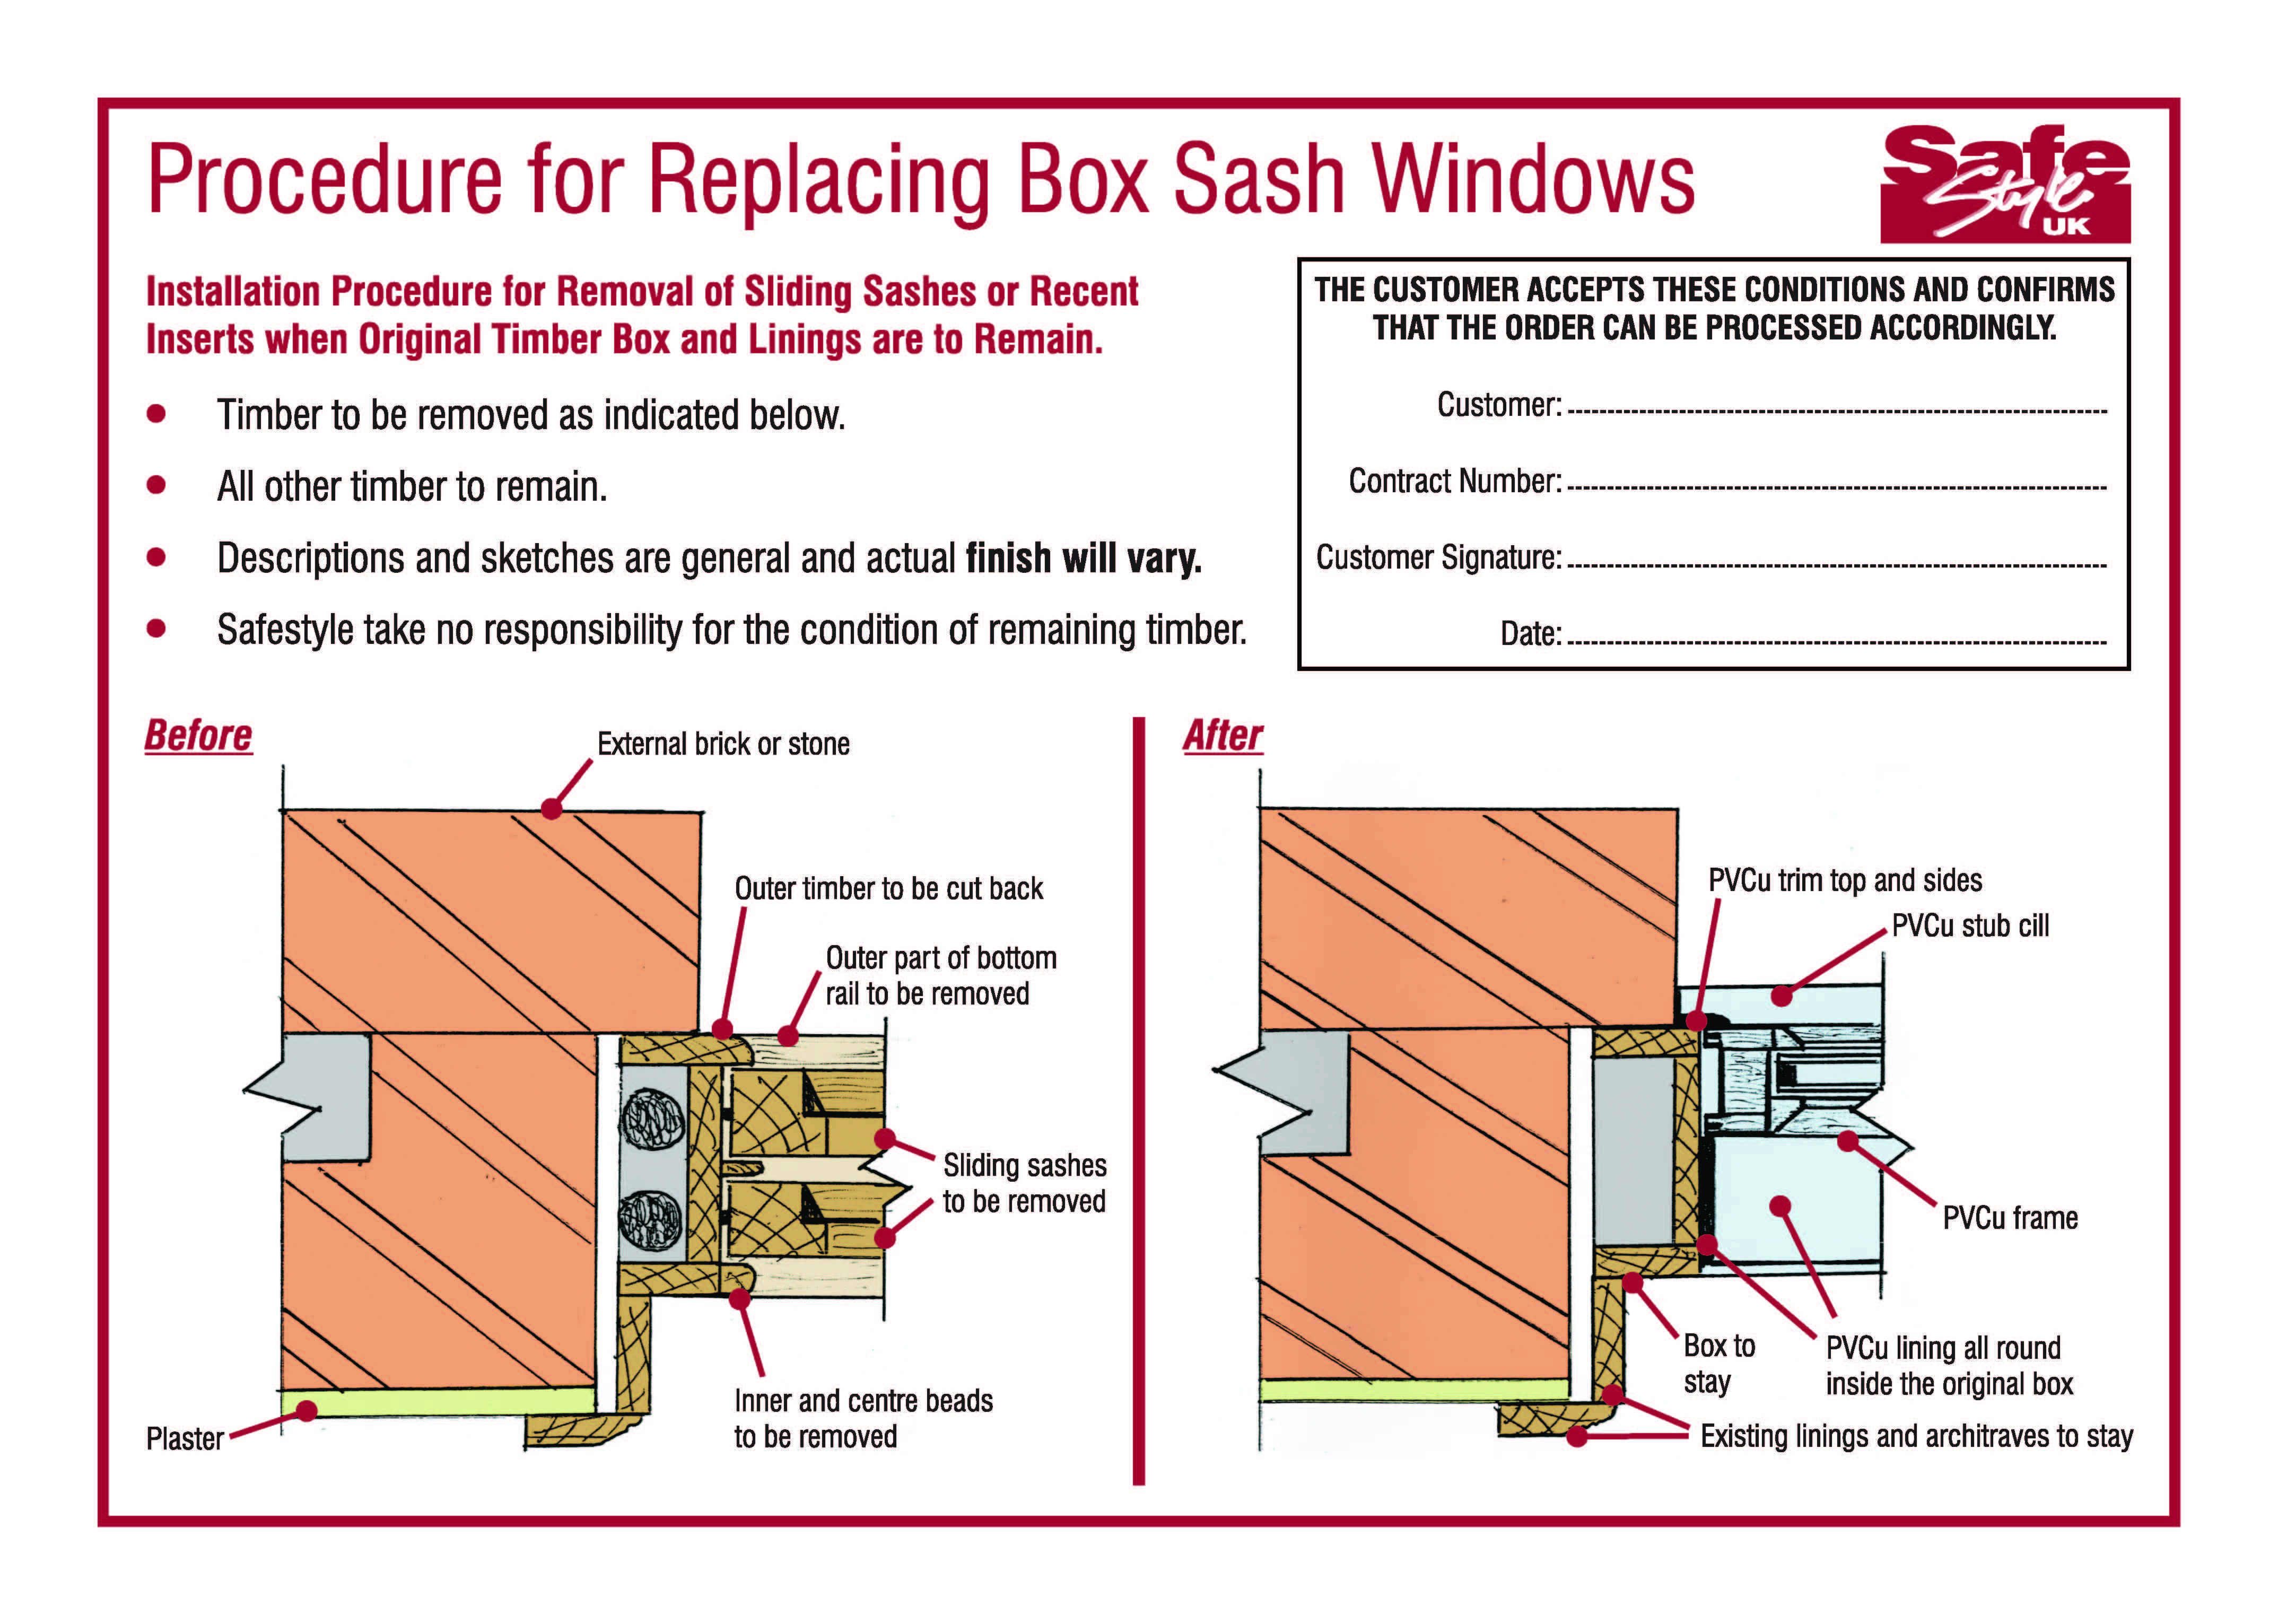 Procedure For Box Sash Windows Form.jpg